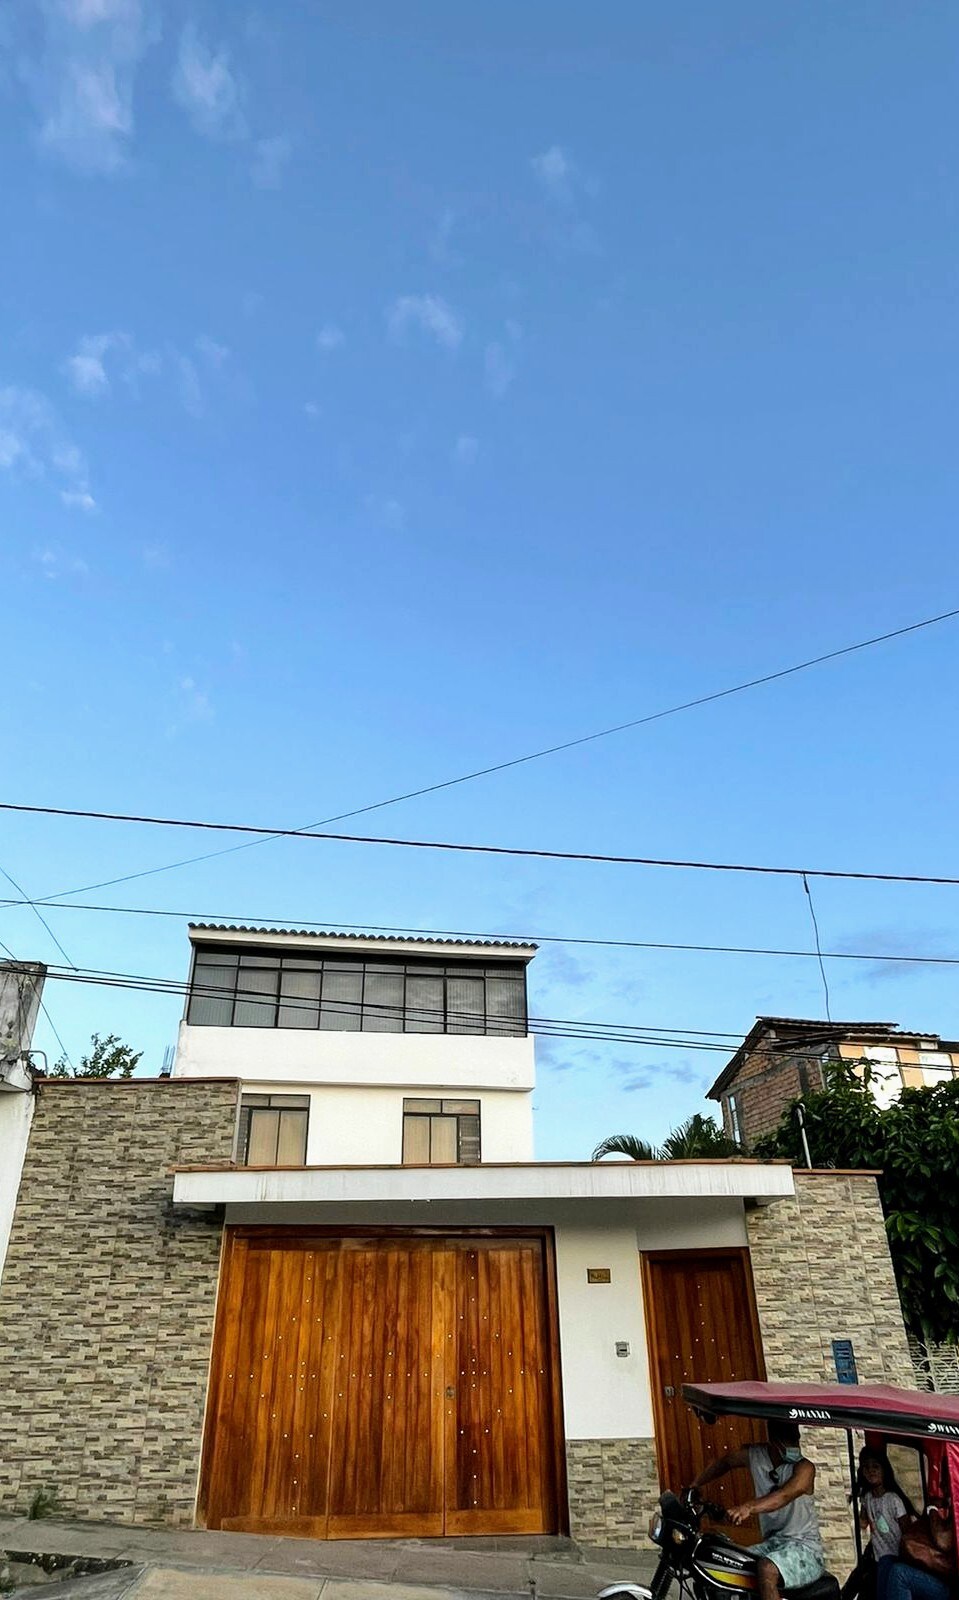 Alojamiento Familiar
IN HOUSE Tarapoto/Confortable